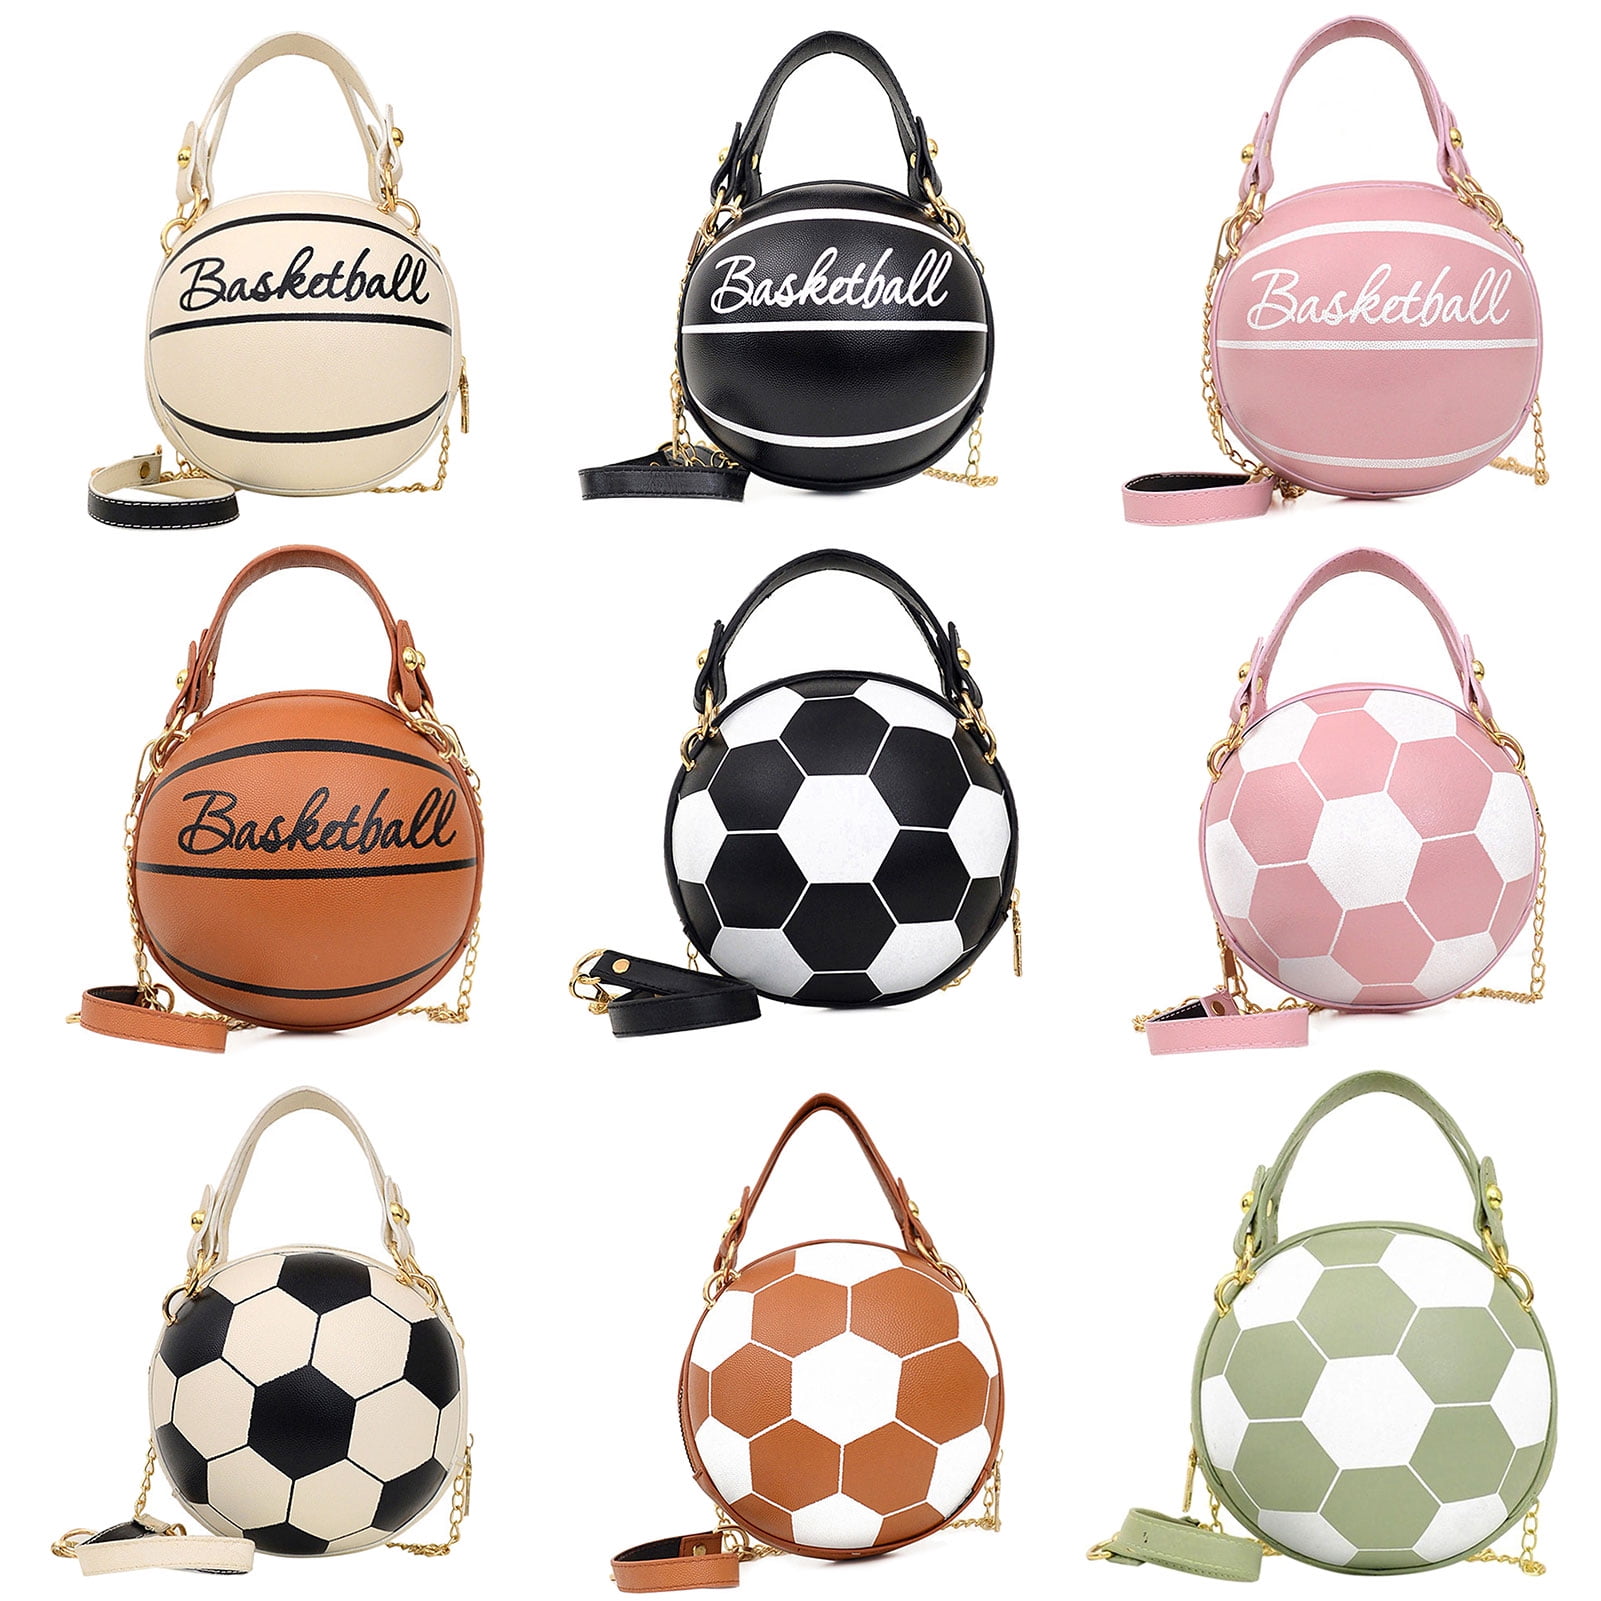 Women's Basketball Purse Bag | eBay